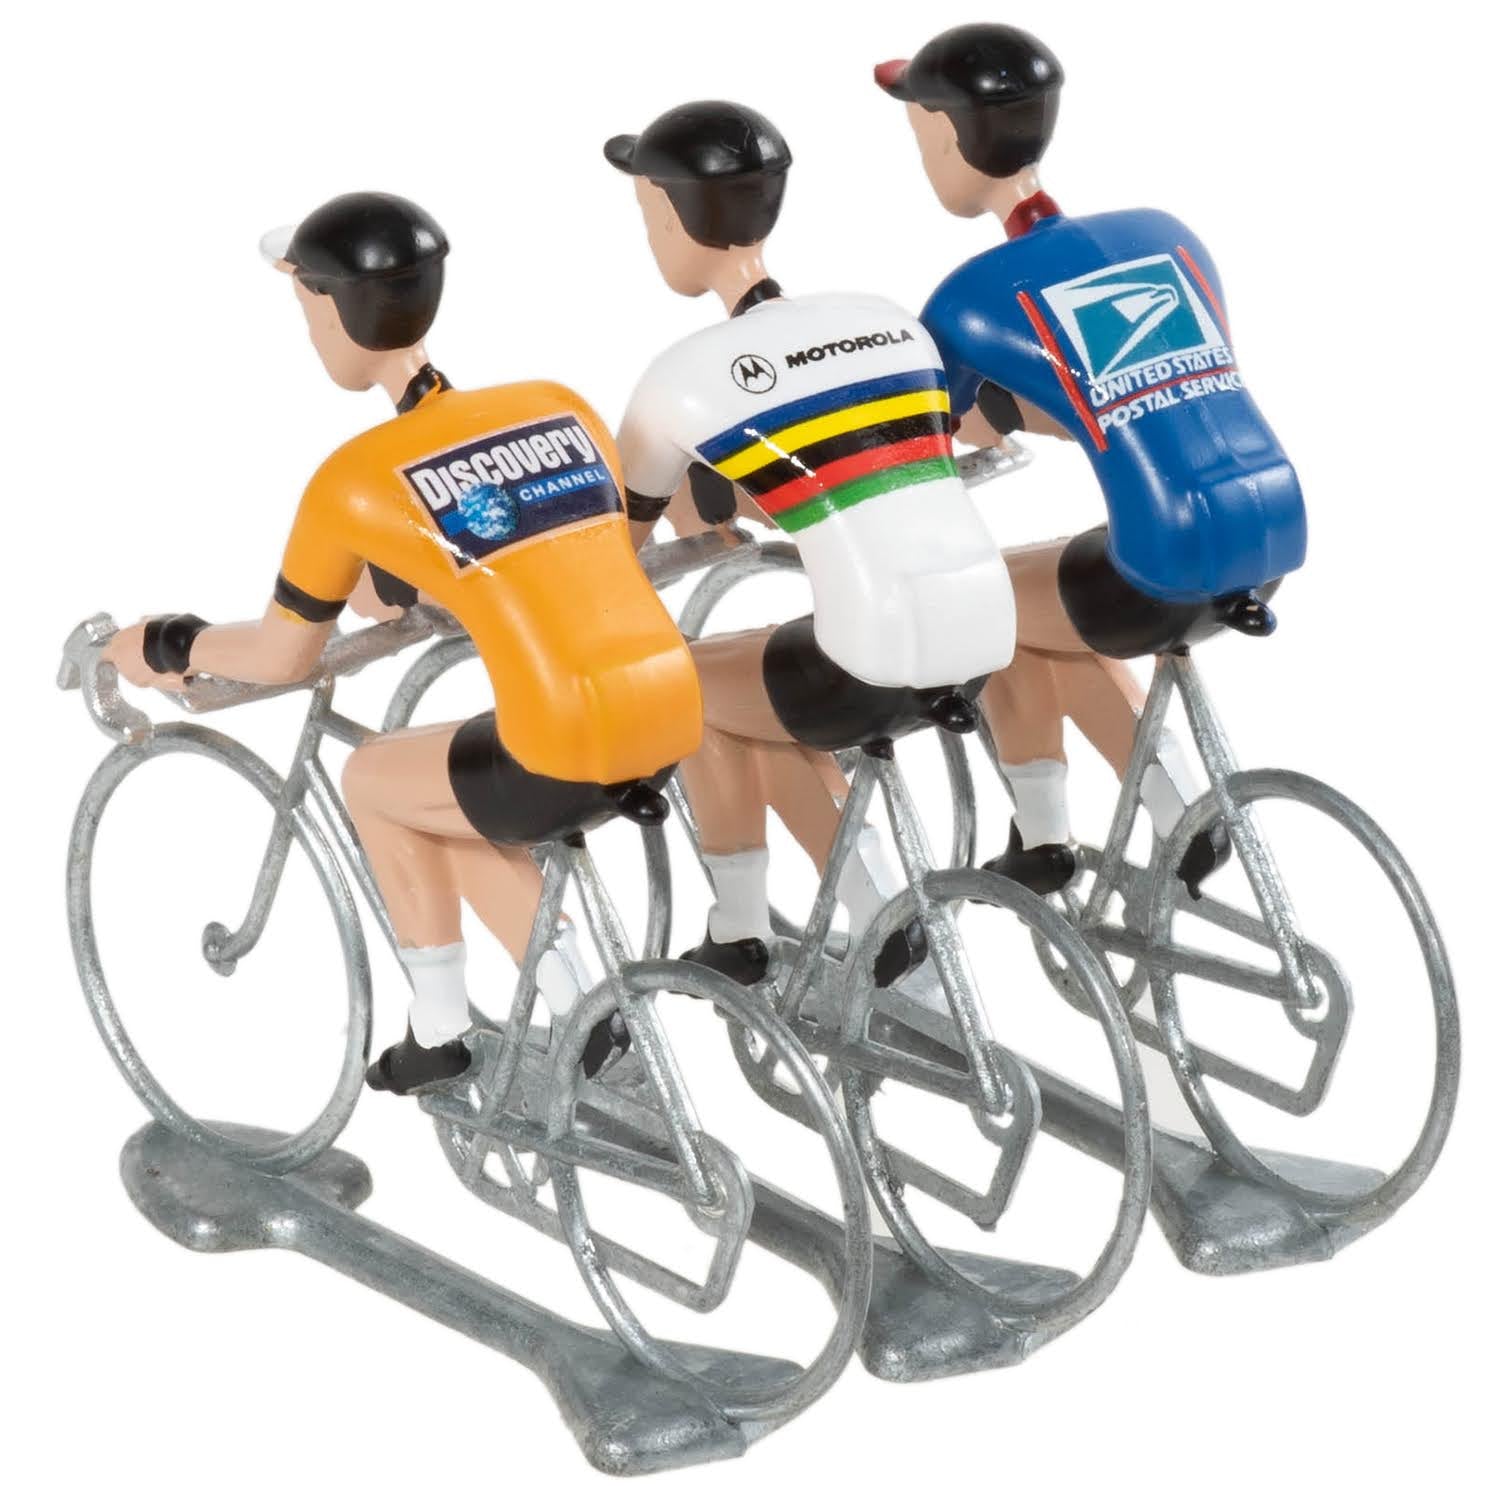 FLANDRIENS Cycling Hero's 3 Cyclists Kit